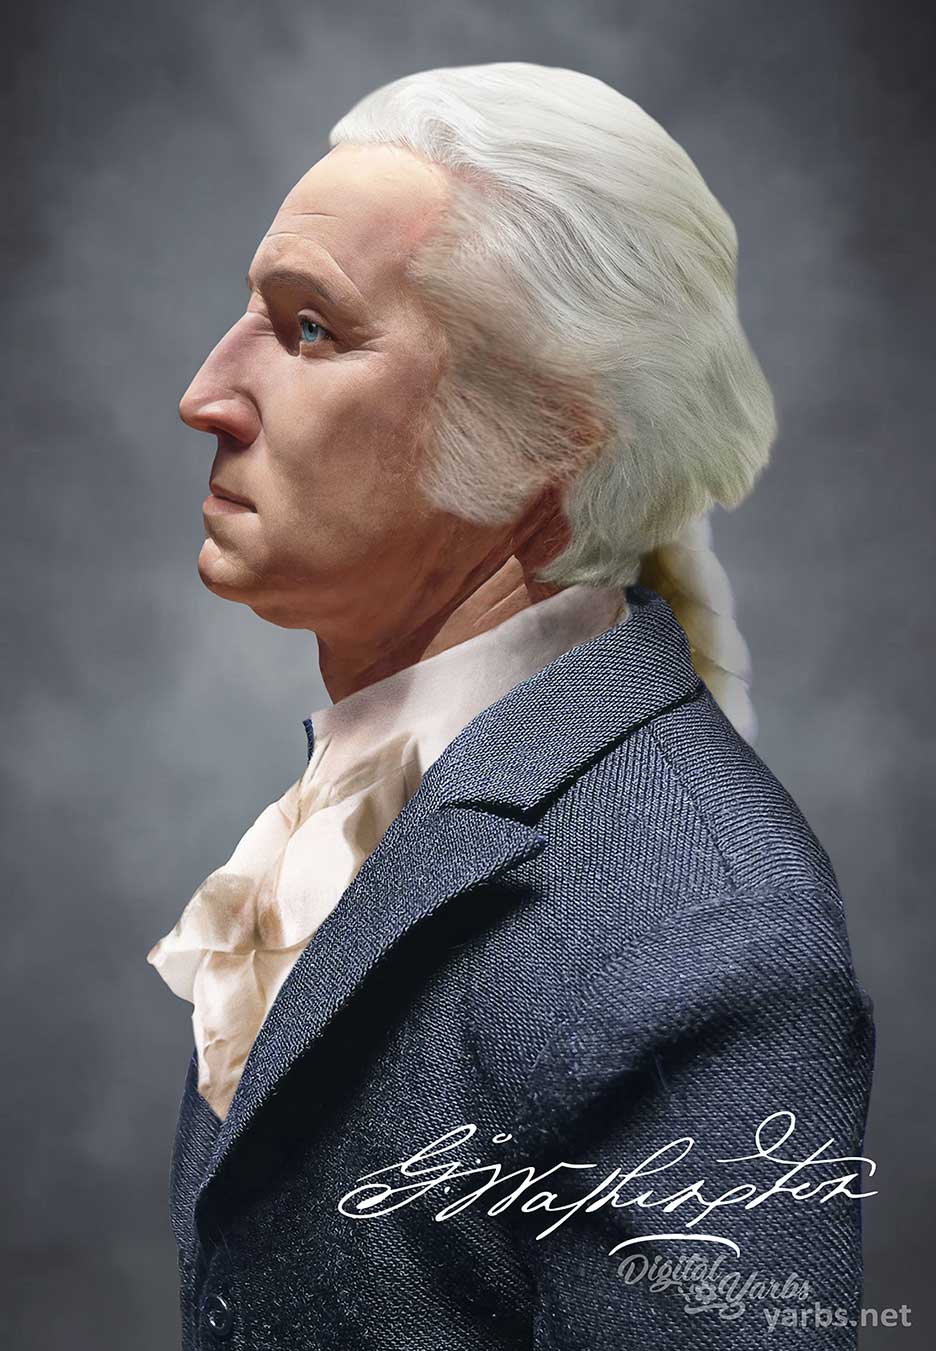 Profile View of George Washington life mask